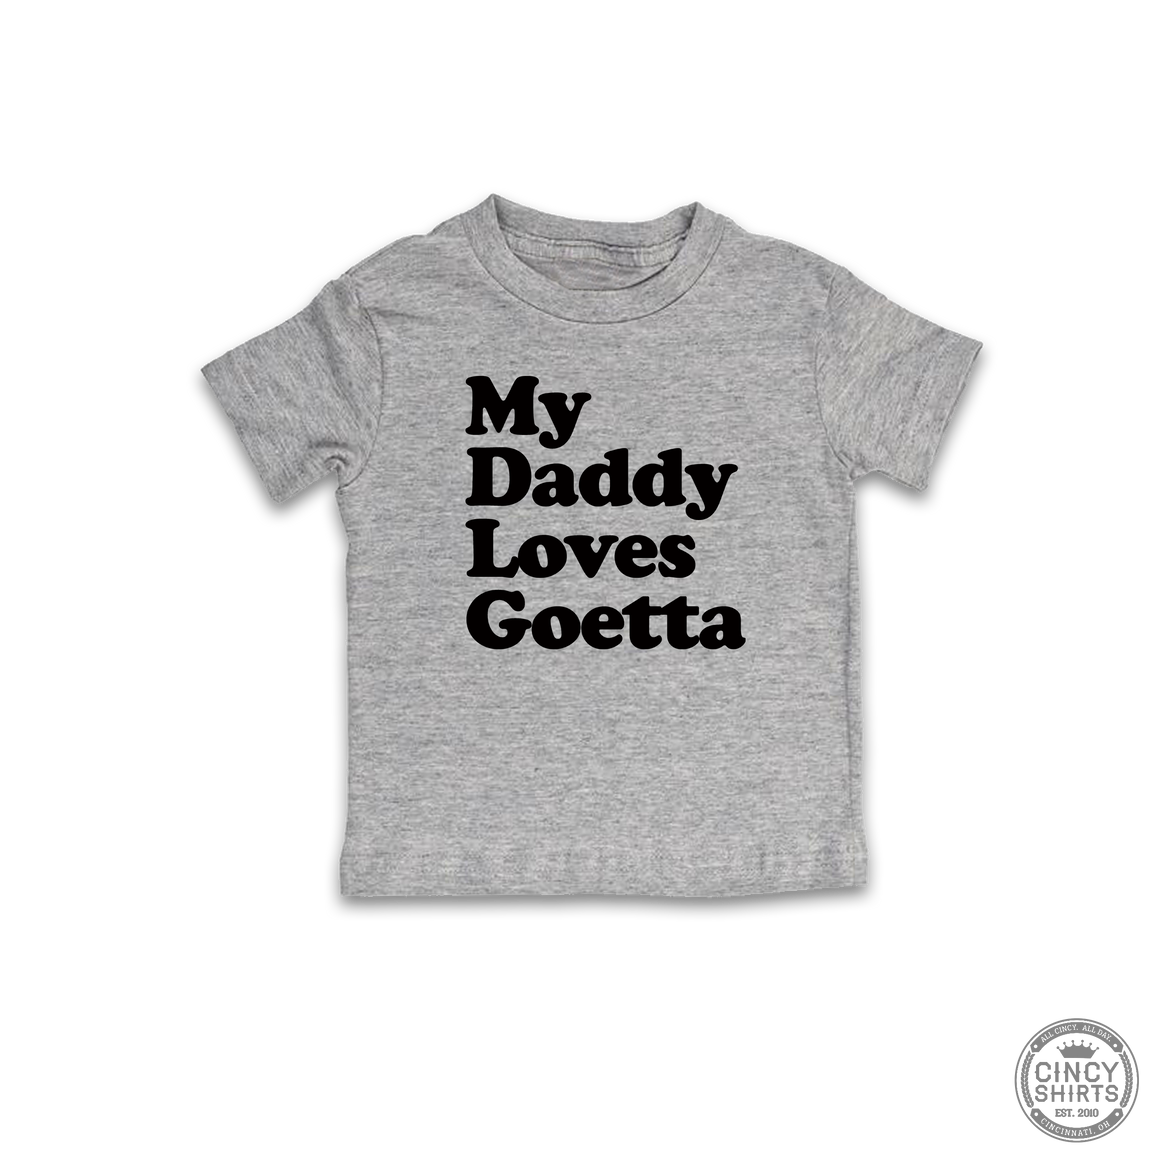 My Daddy Loves Goetta - Youth Sizes - Cincy Shirts